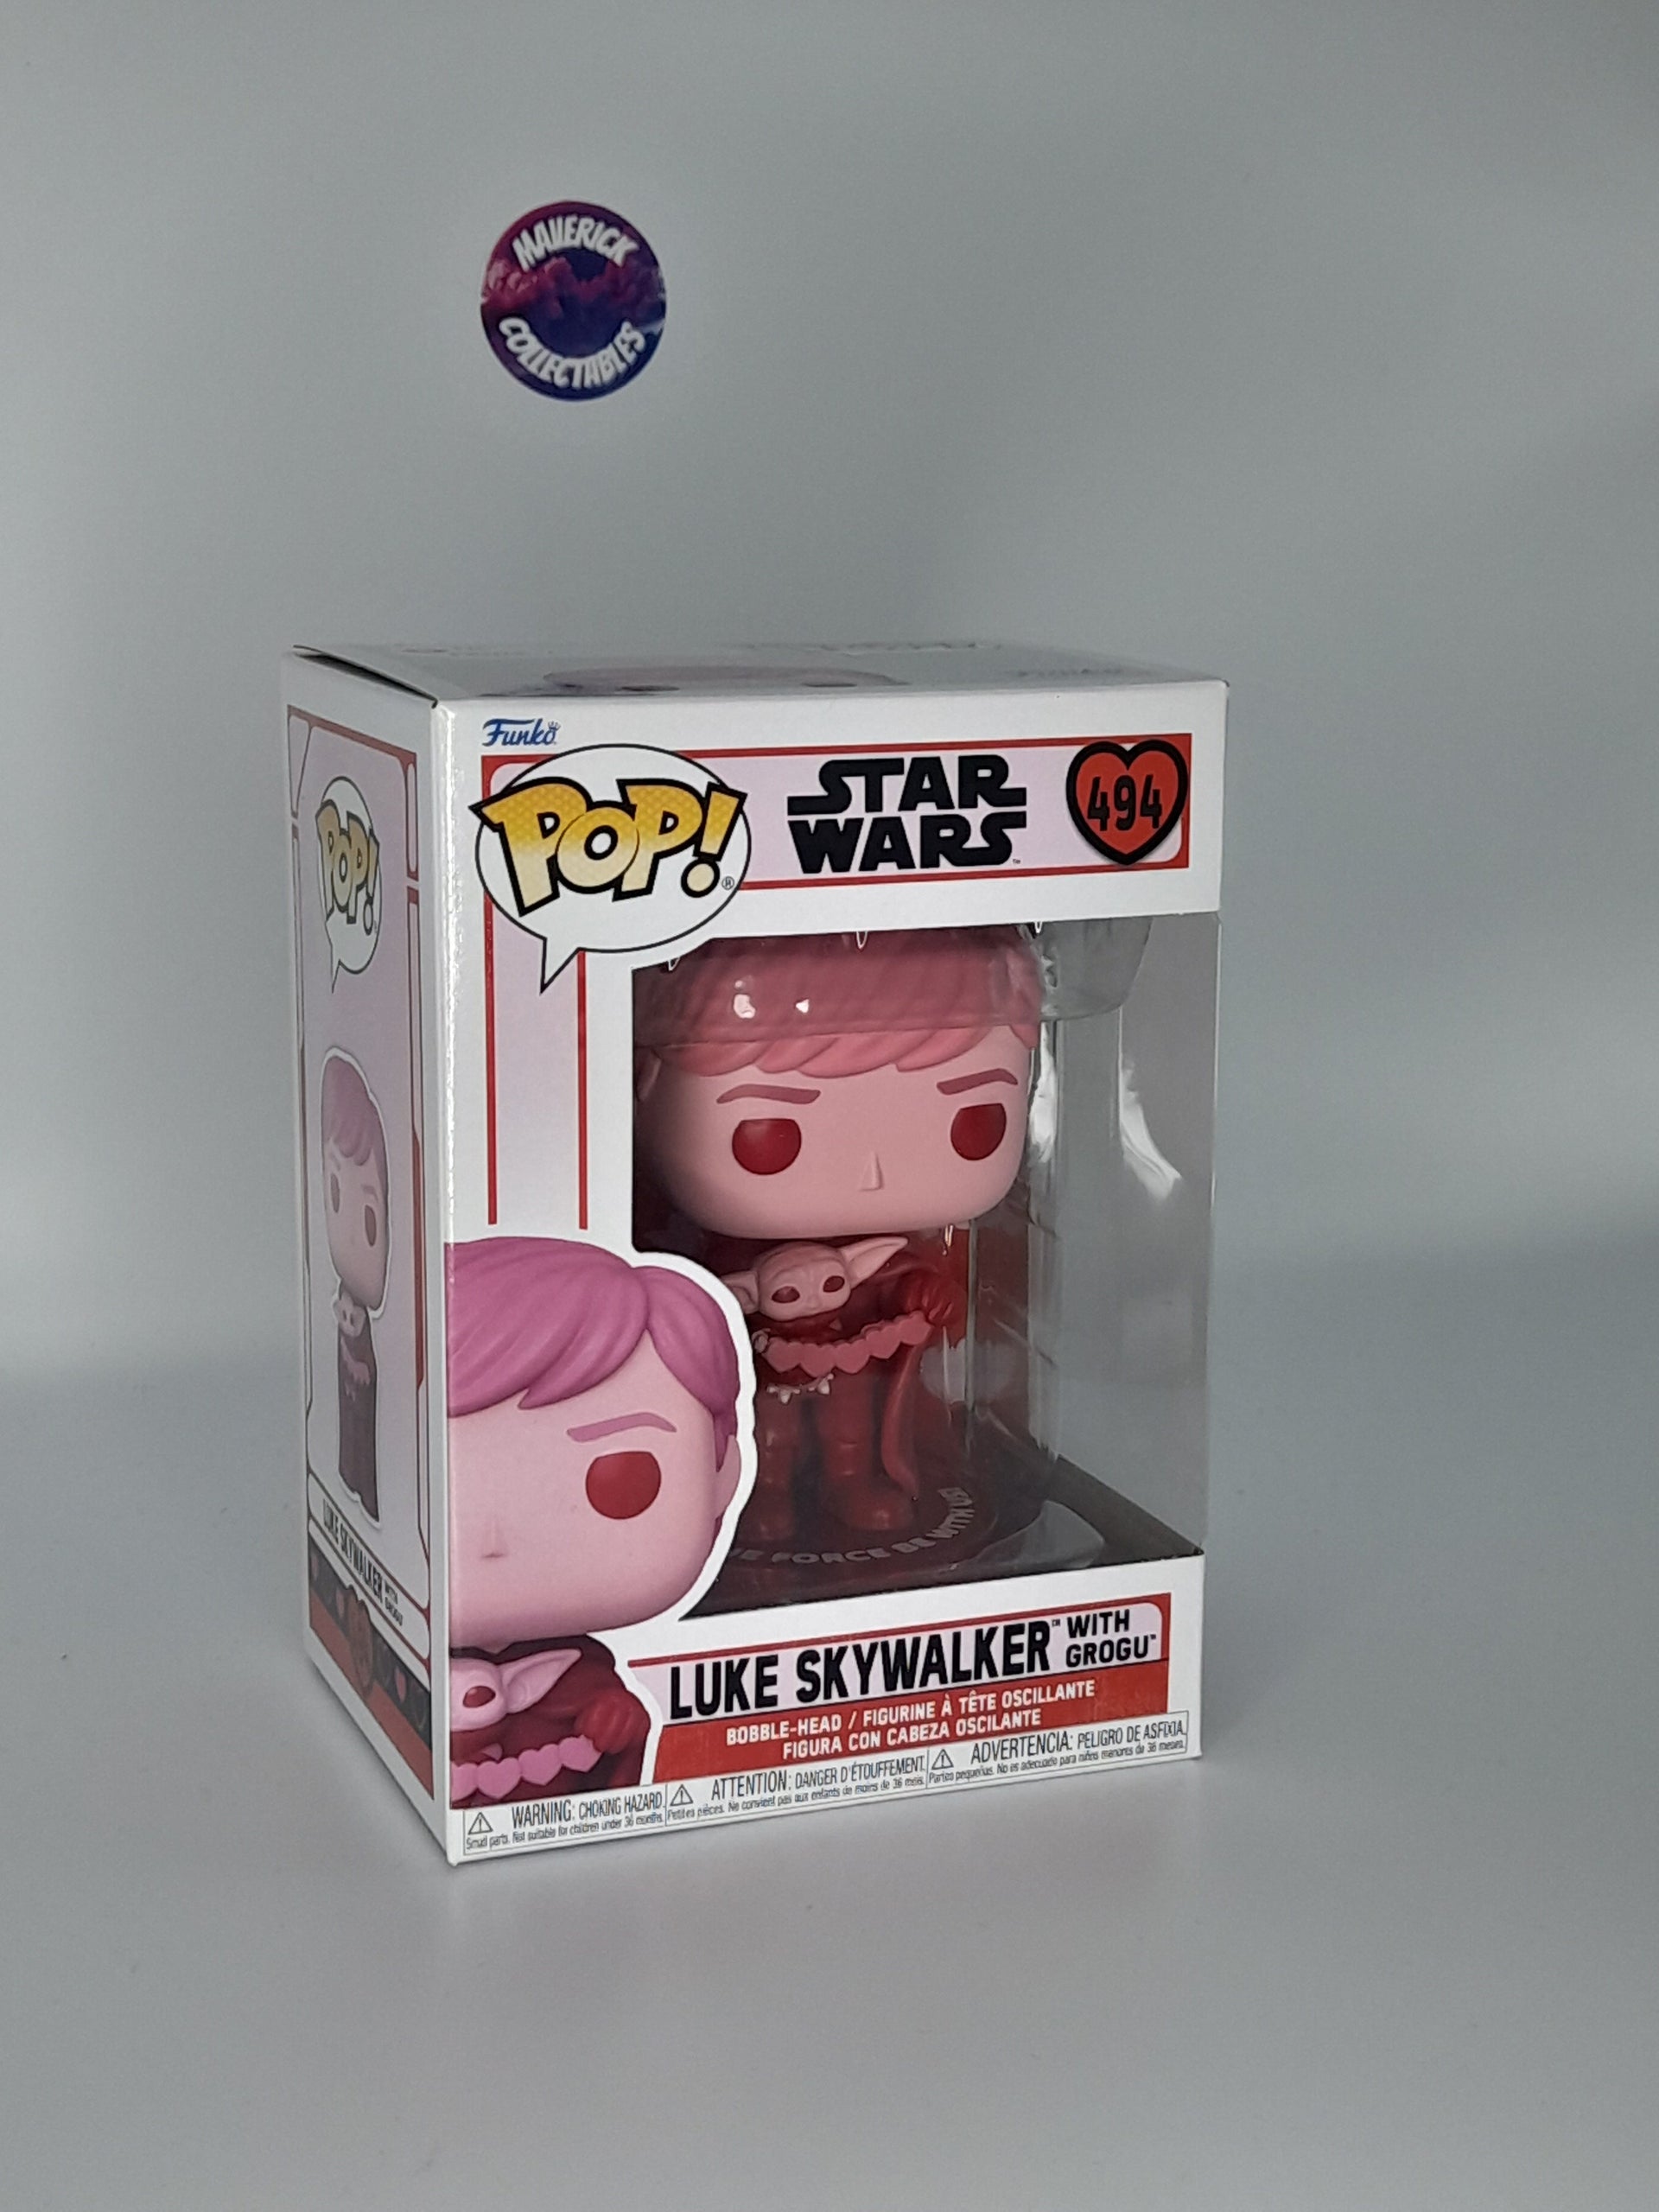 Funko POP #494 Luke Skywalker with Grogu Star Wars Valentine's